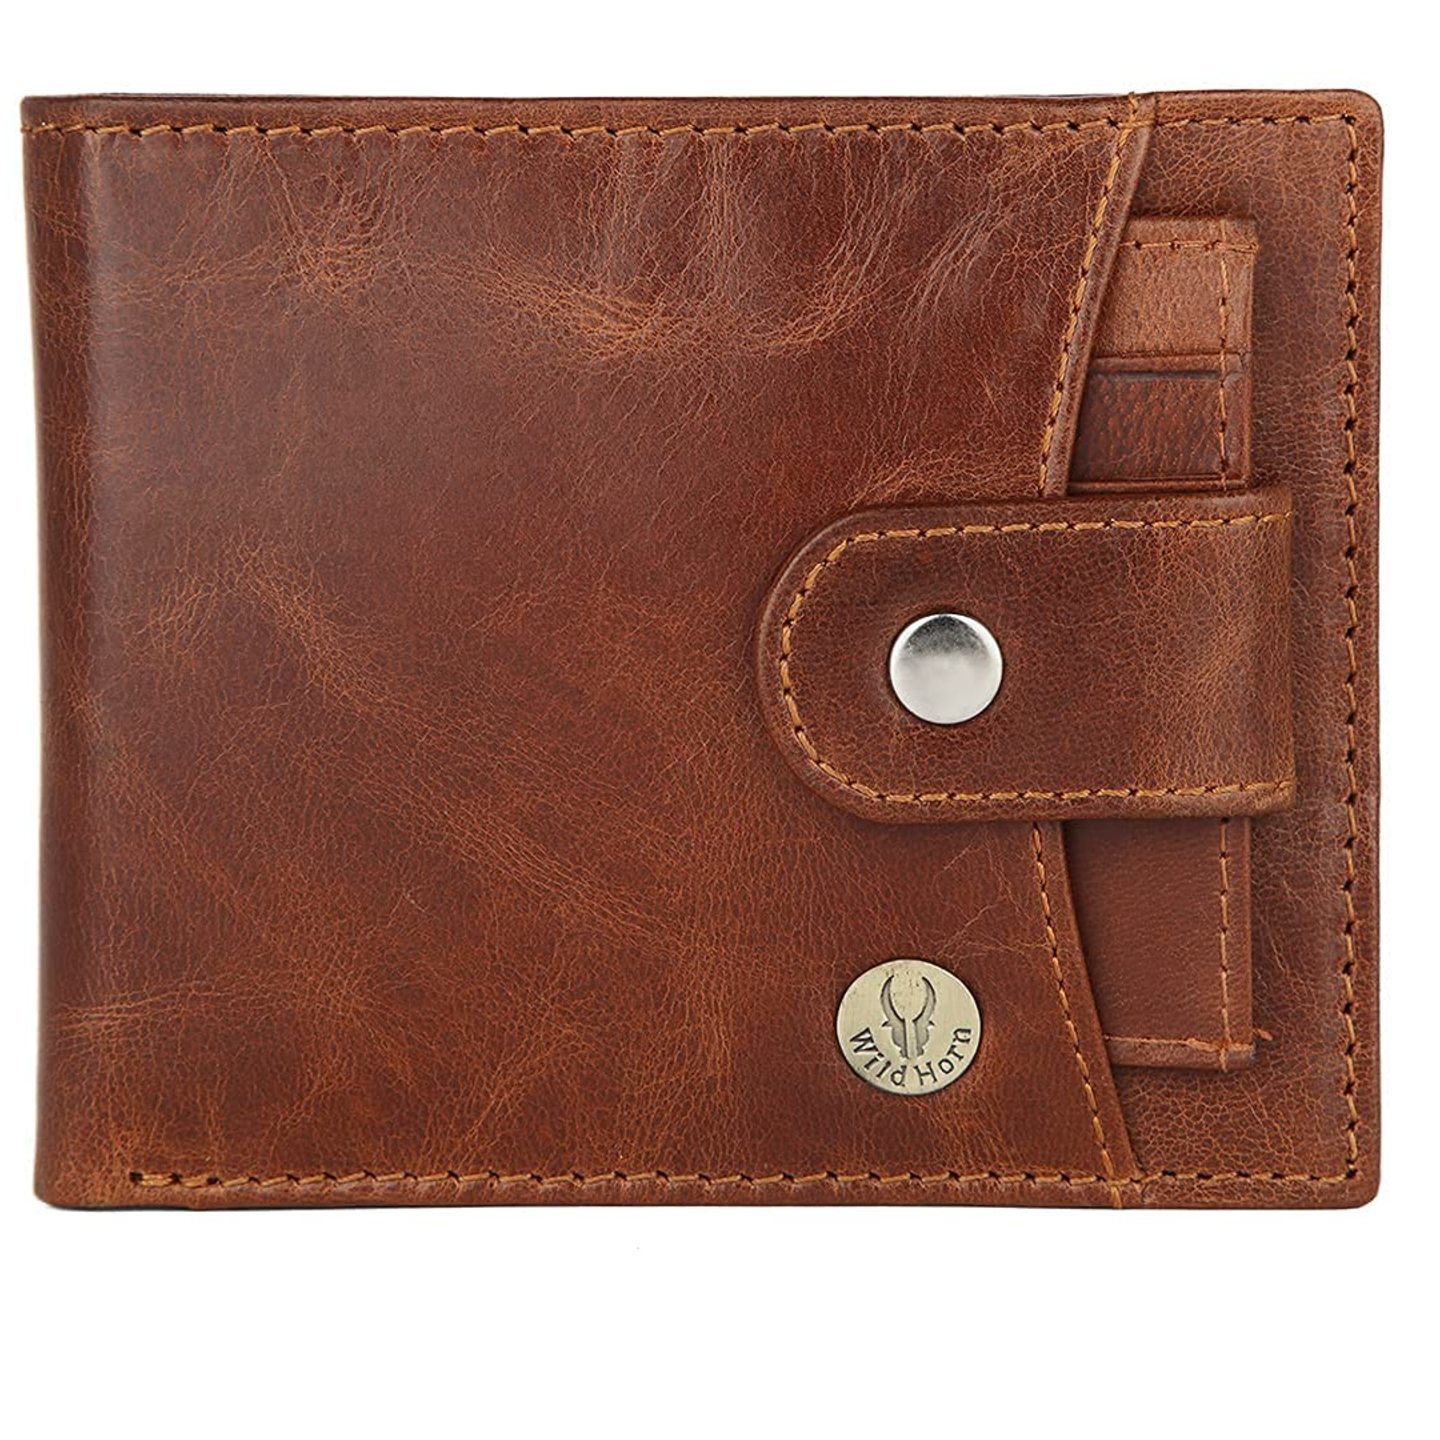 WILDHORN Leather Wallet for Men Tan